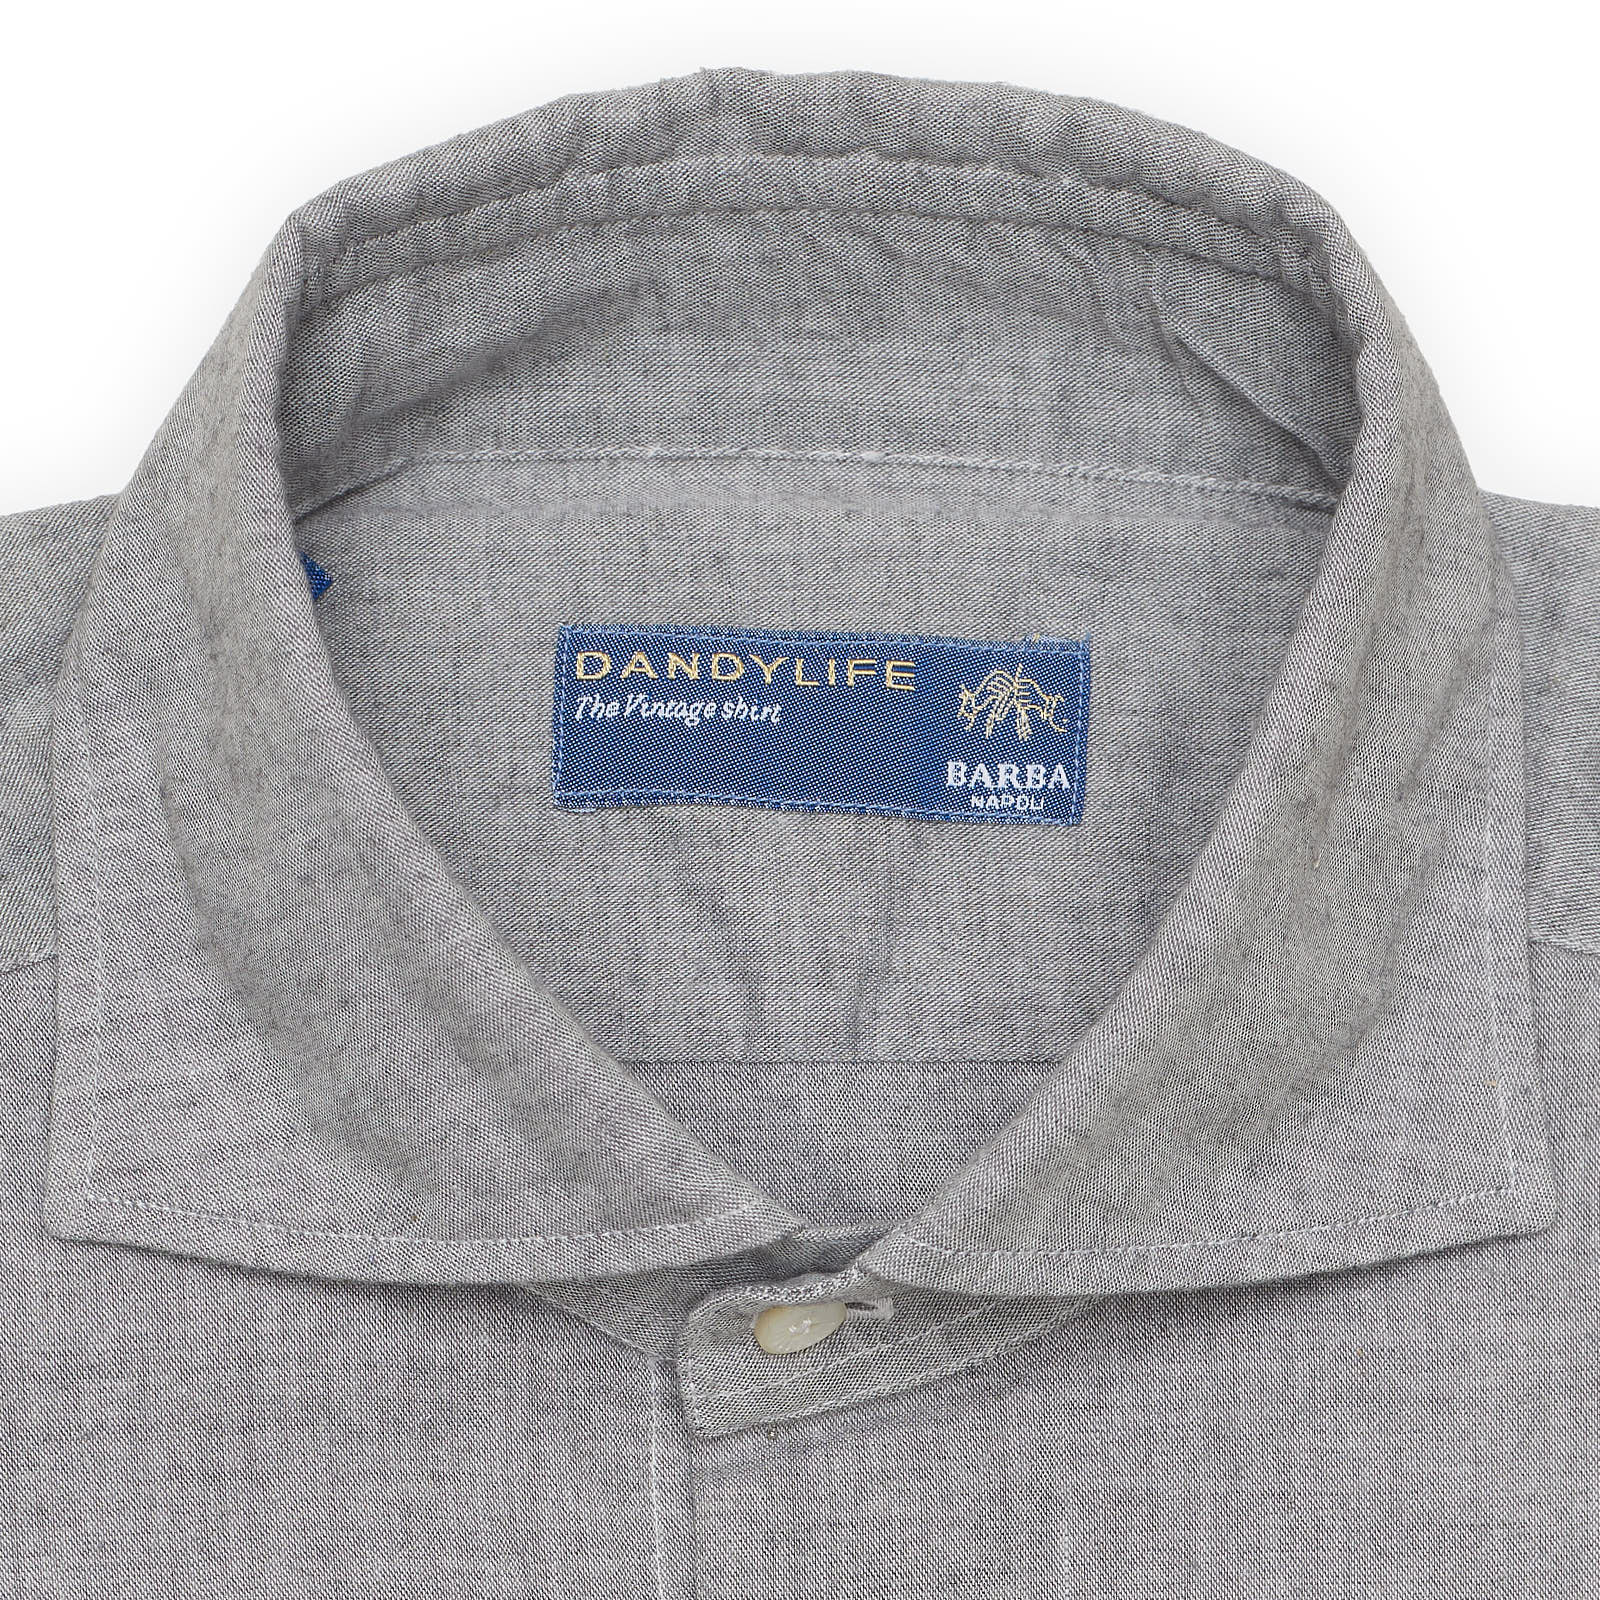 BARBA Napoli for Dandylife Gray Brushed Cotton Shirt EU 38 NEW US 15